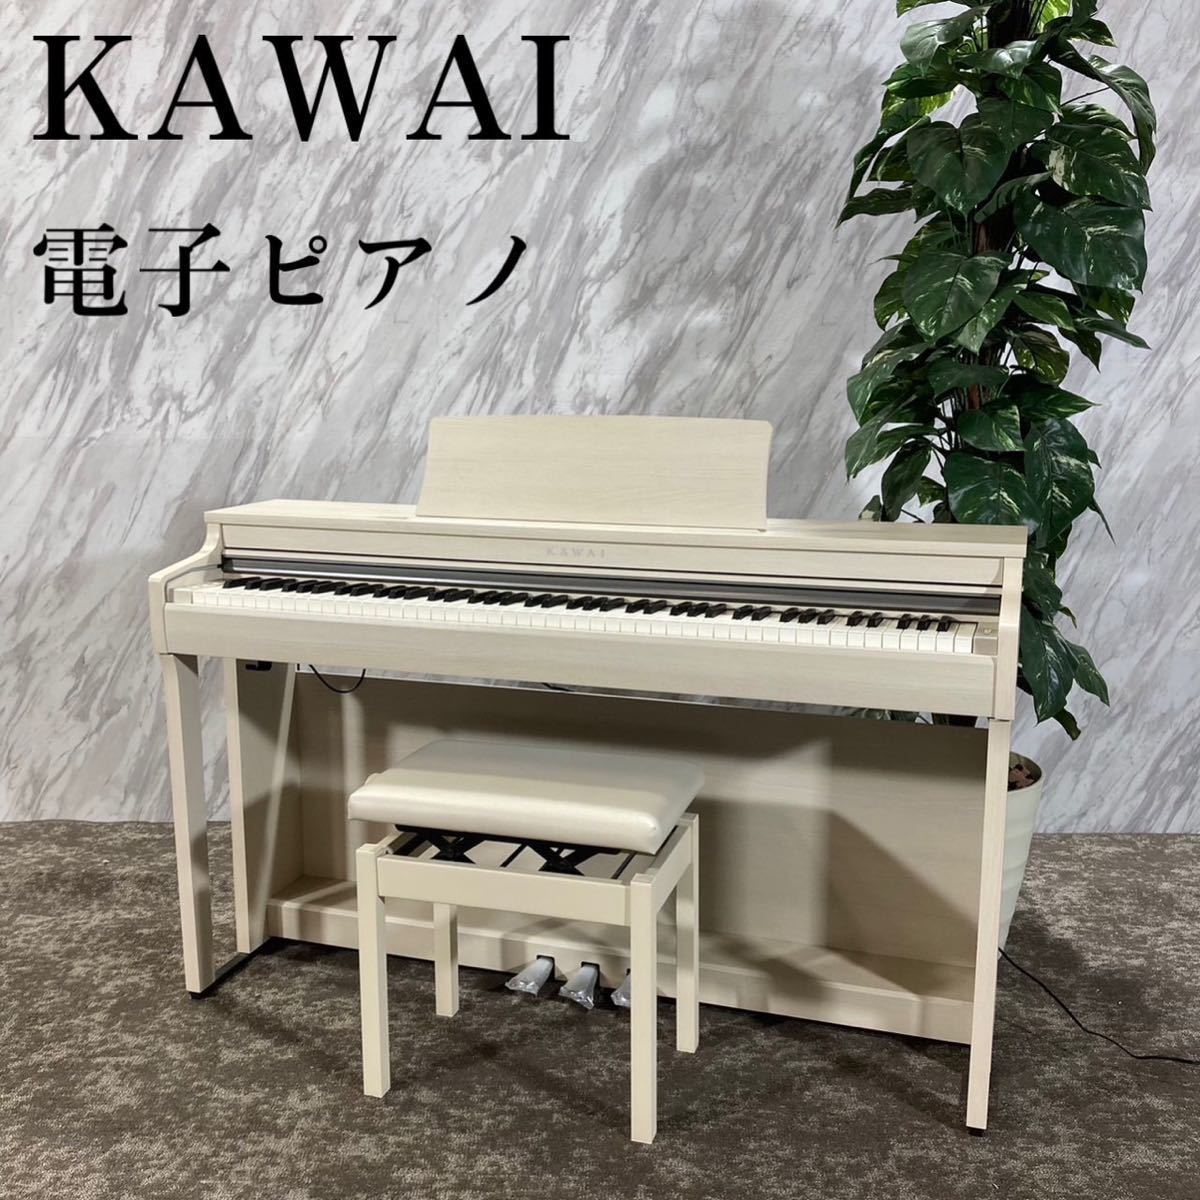 KAWAI 電子ピアノ CN27A 楽器 プレミアムホワイトメープル調 E062